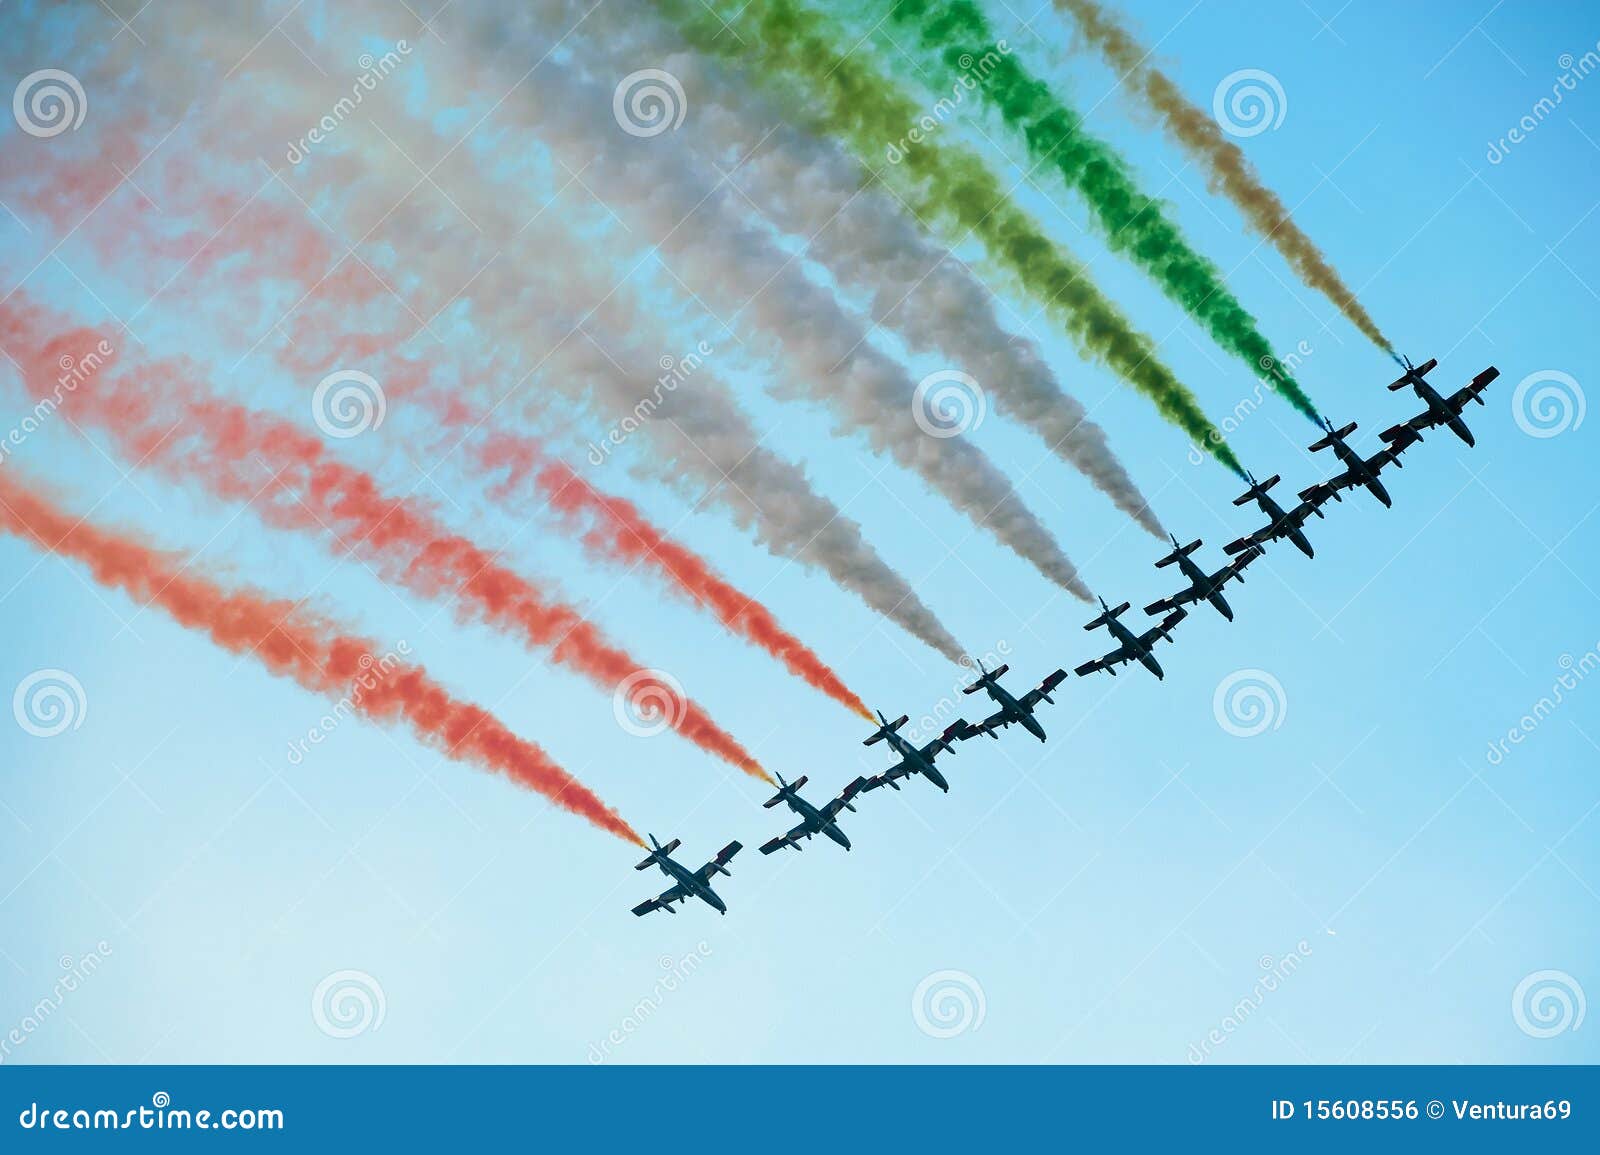 aerobatics team flying in formation